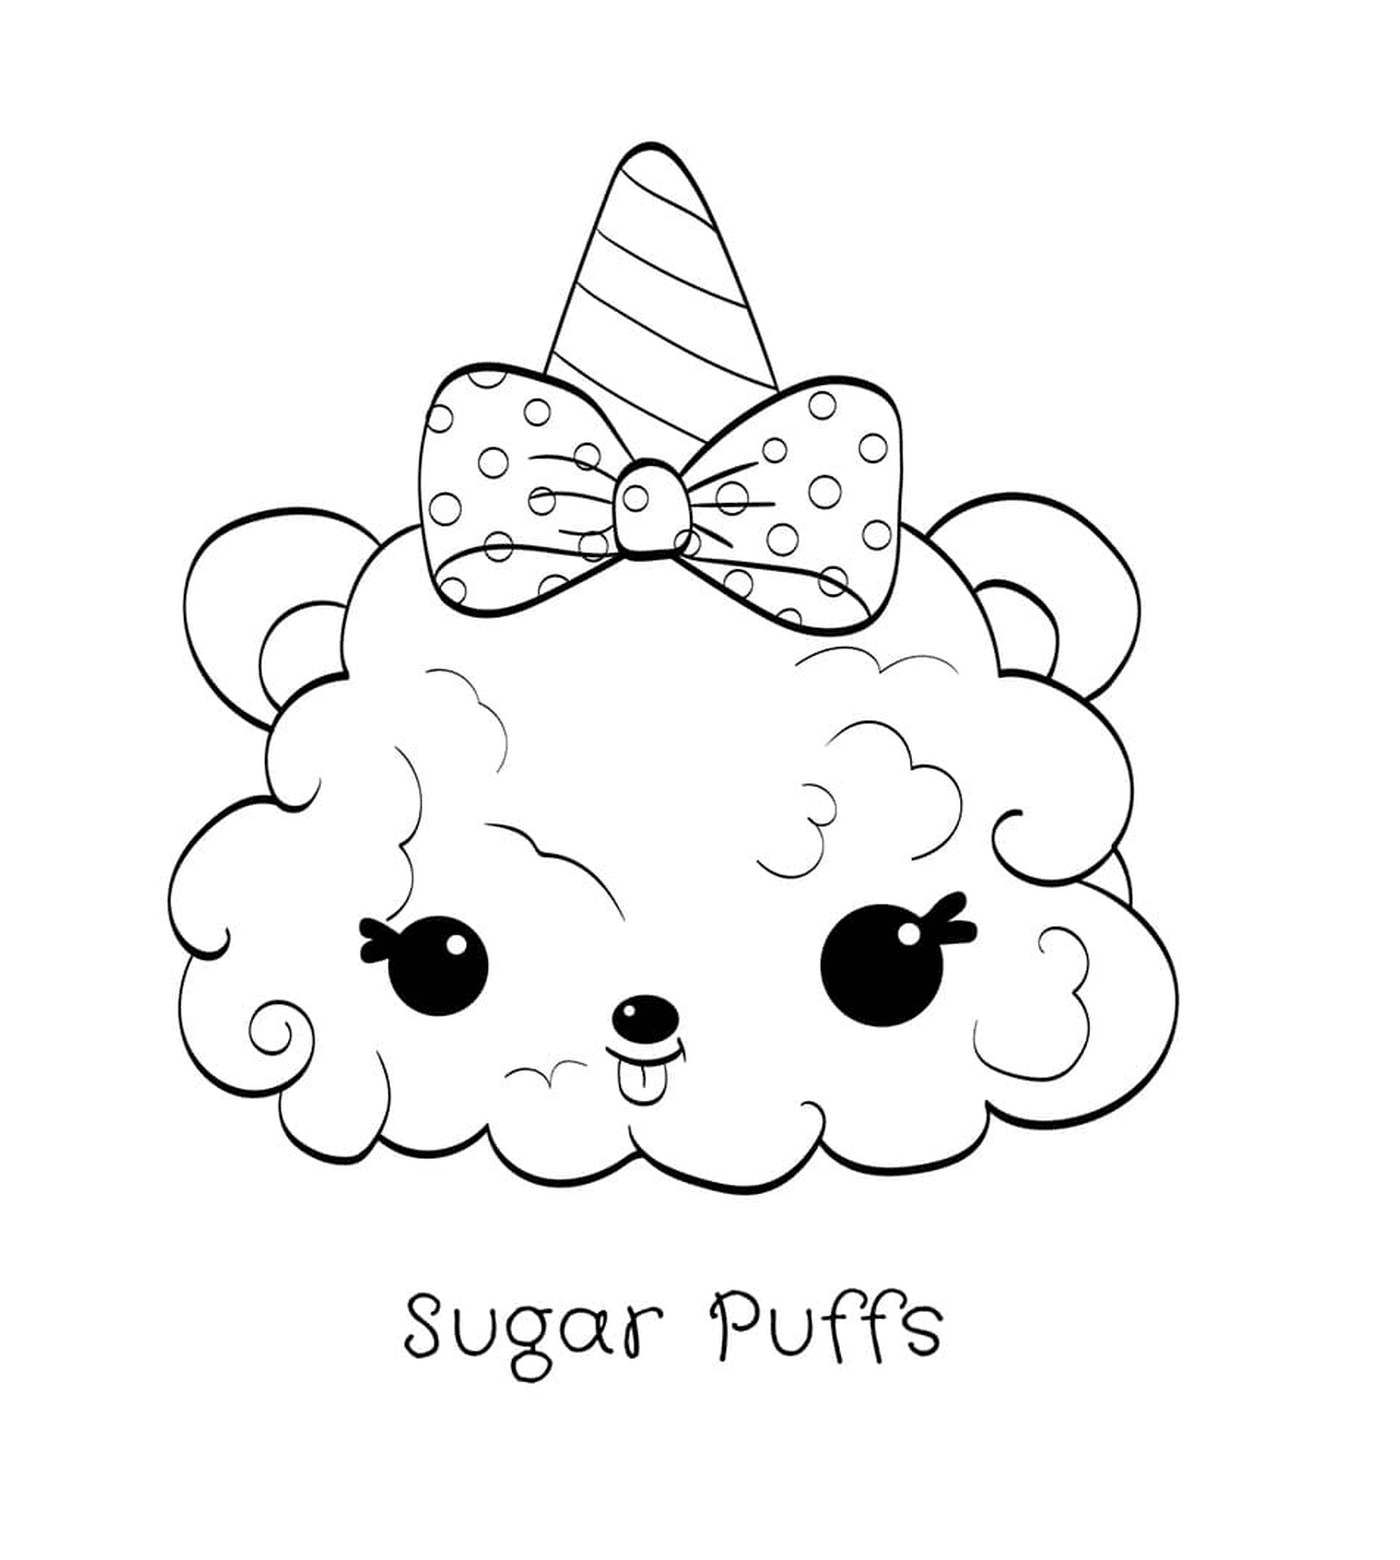   Puffs au sucre 